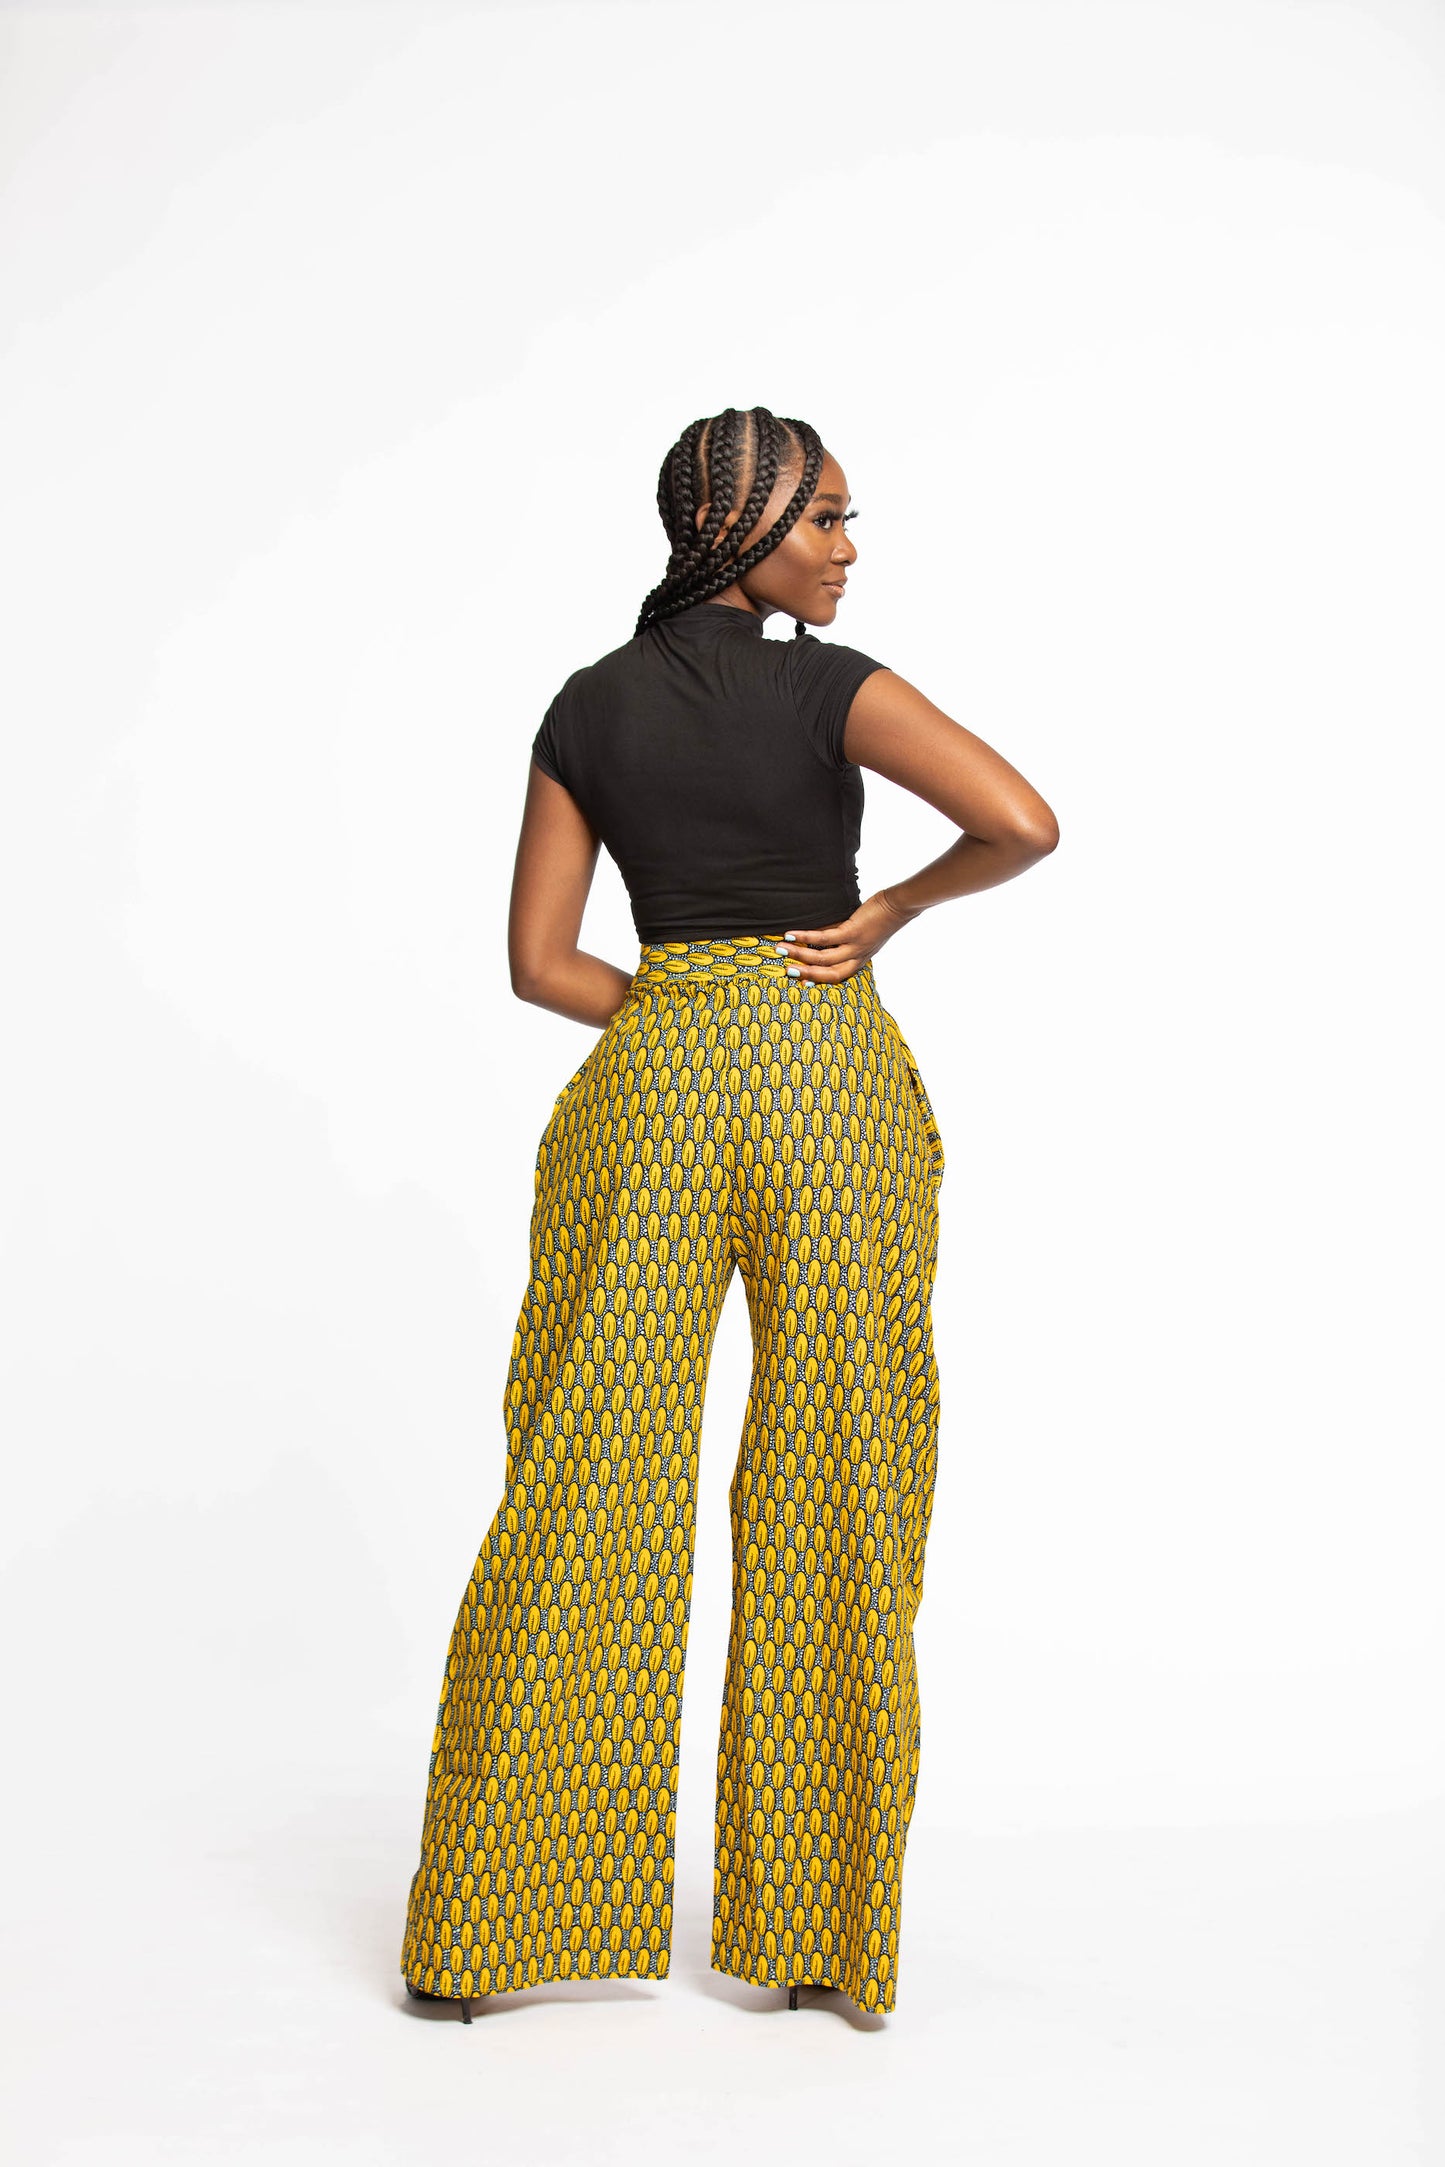 Lamley African Print pants